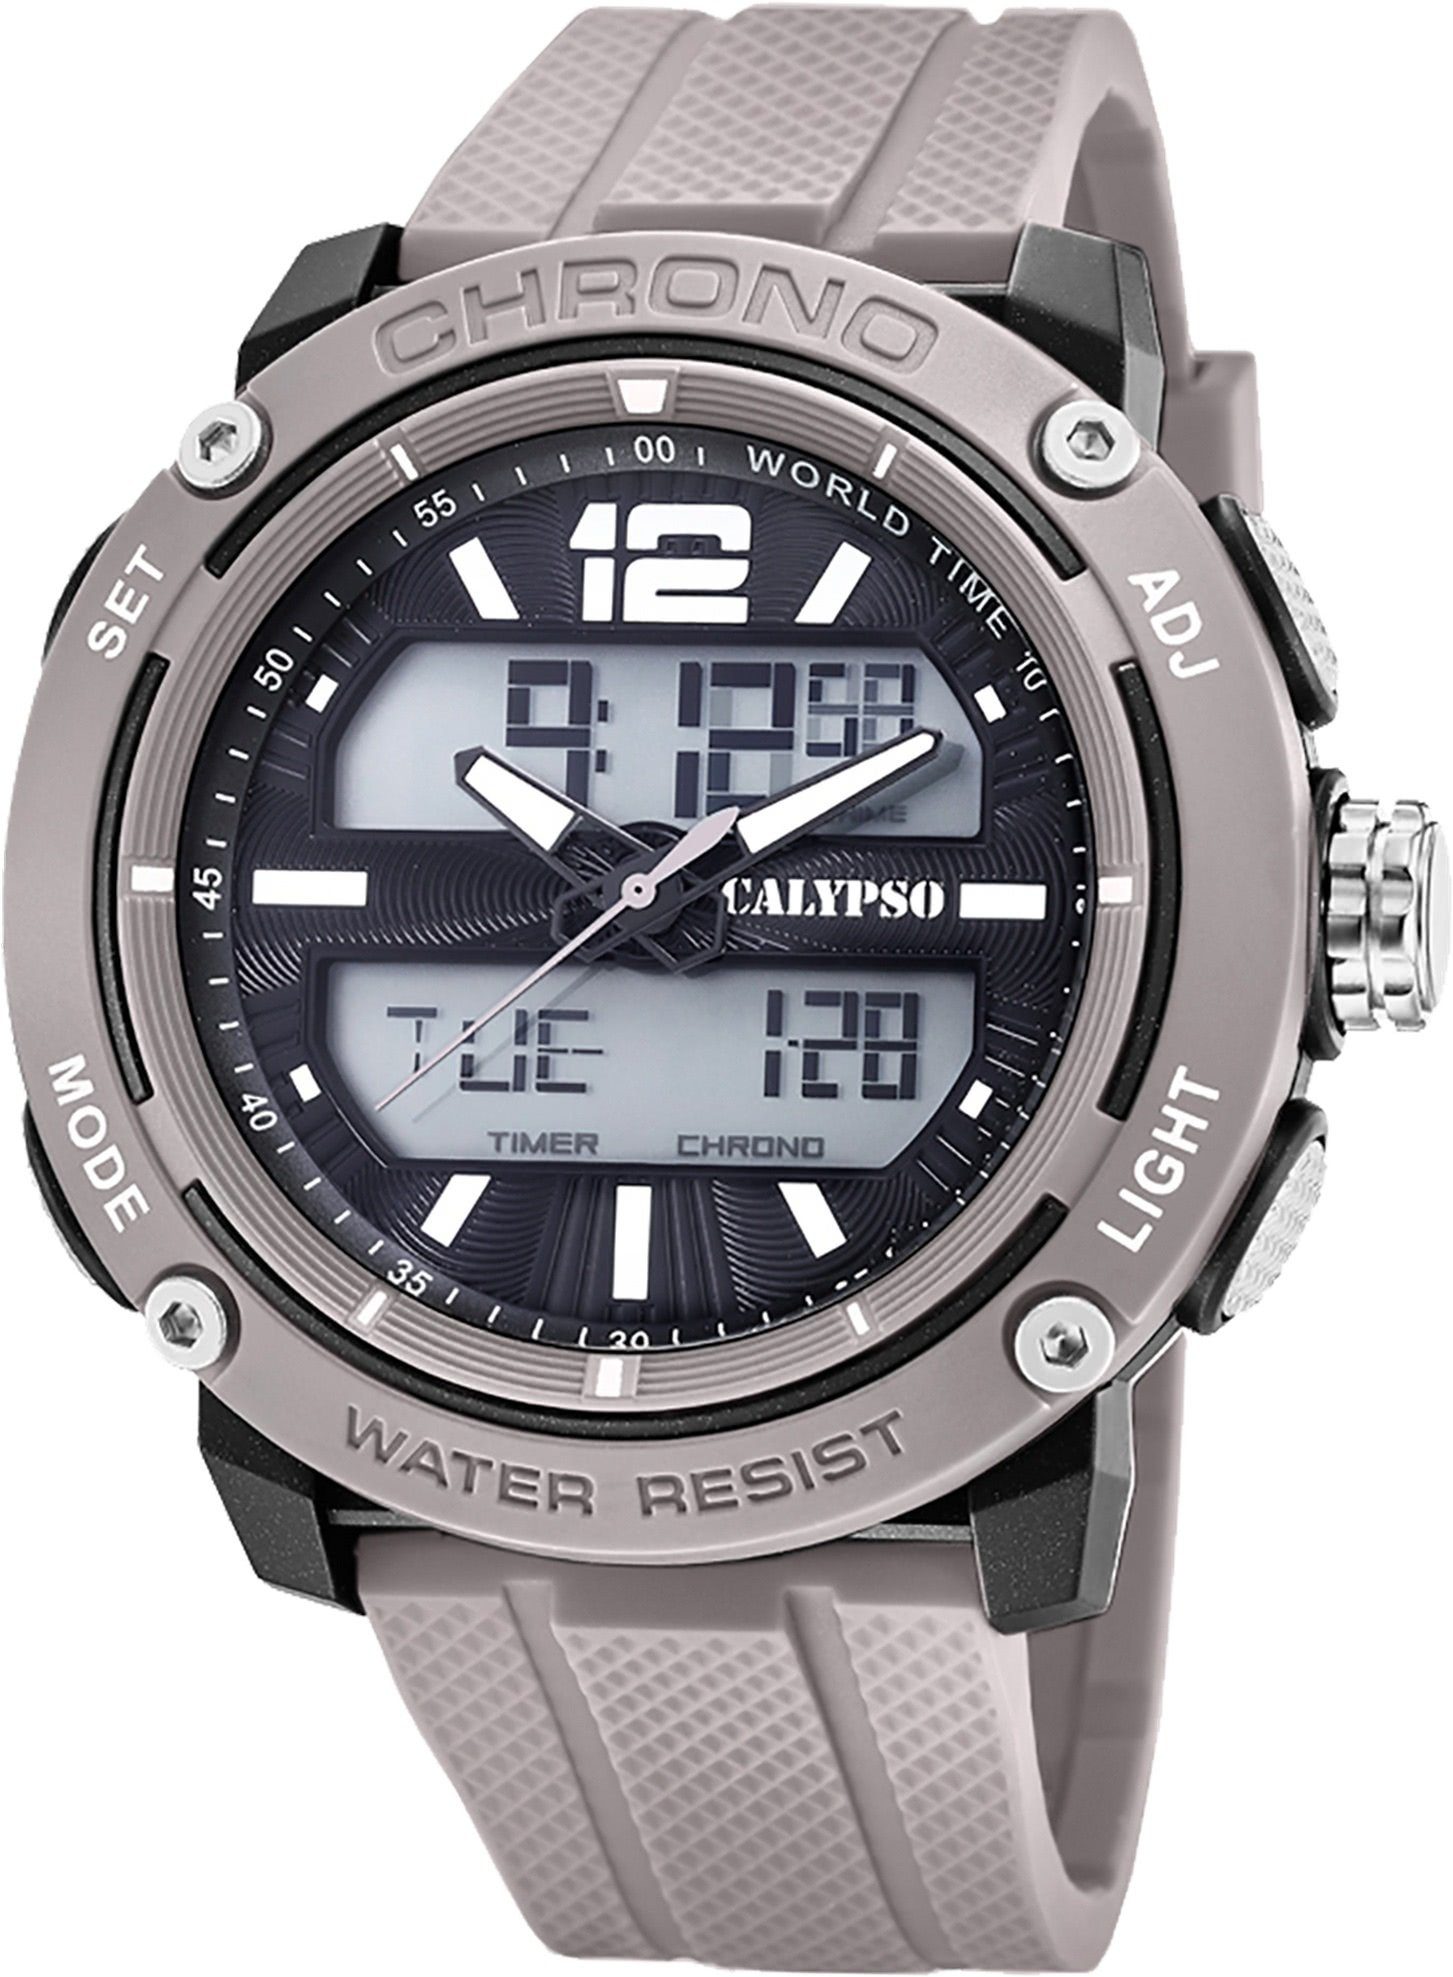 Analog-Digital, Digitaluhr CALYPSO Calypso WATCHES Outdoor rund, Armbanduhr grau, Herren Uhr Herren Kunststoffarmband